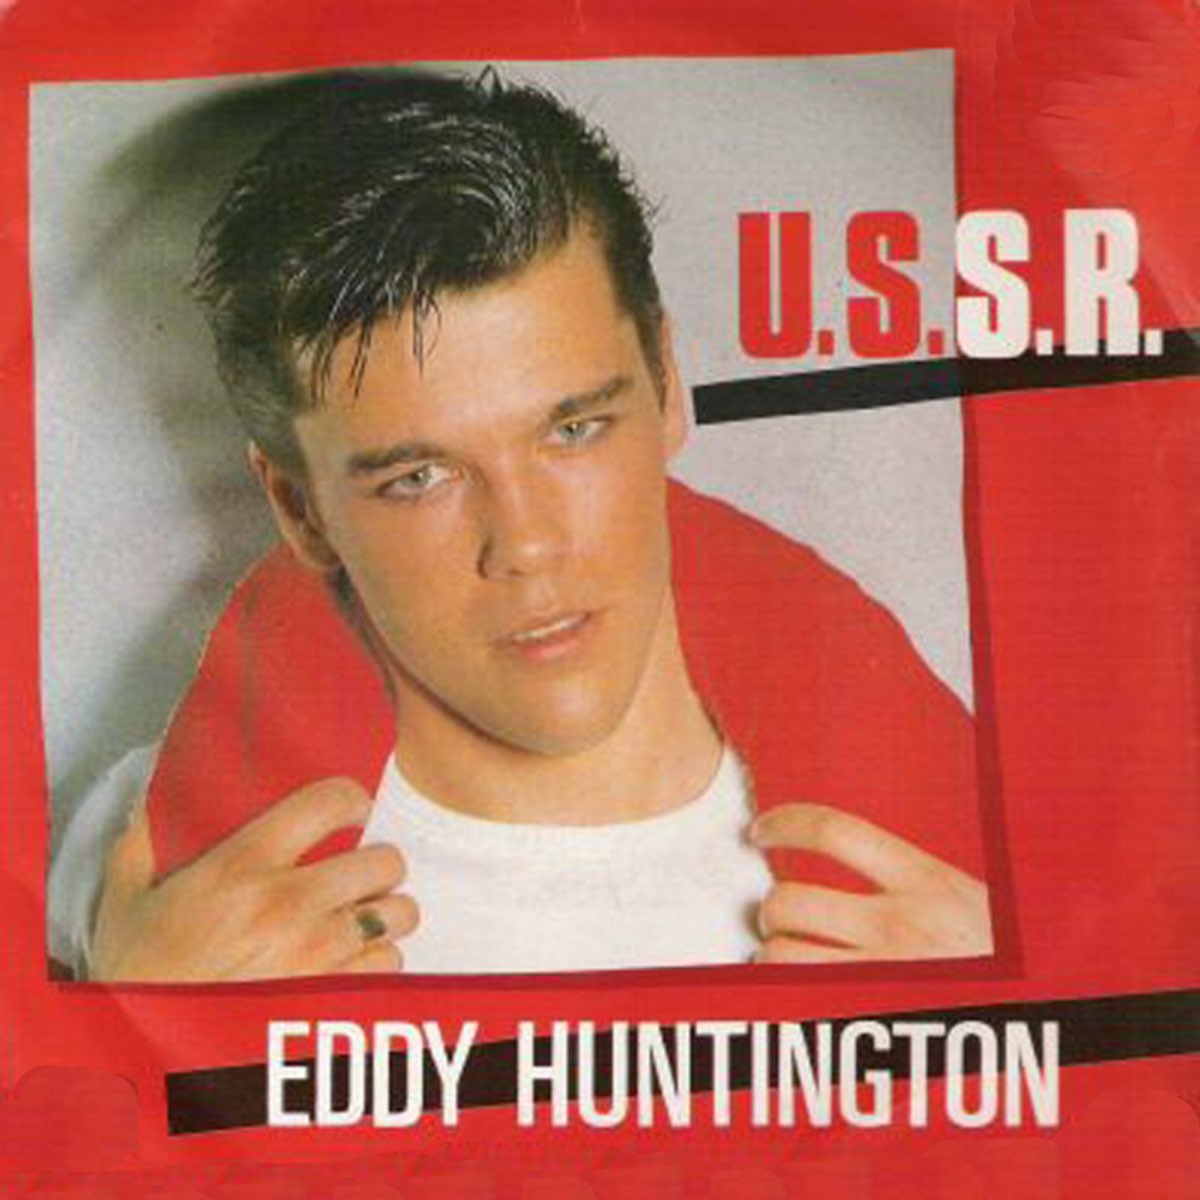 U.S.S.R. by Eddy Huntington on Apple Music